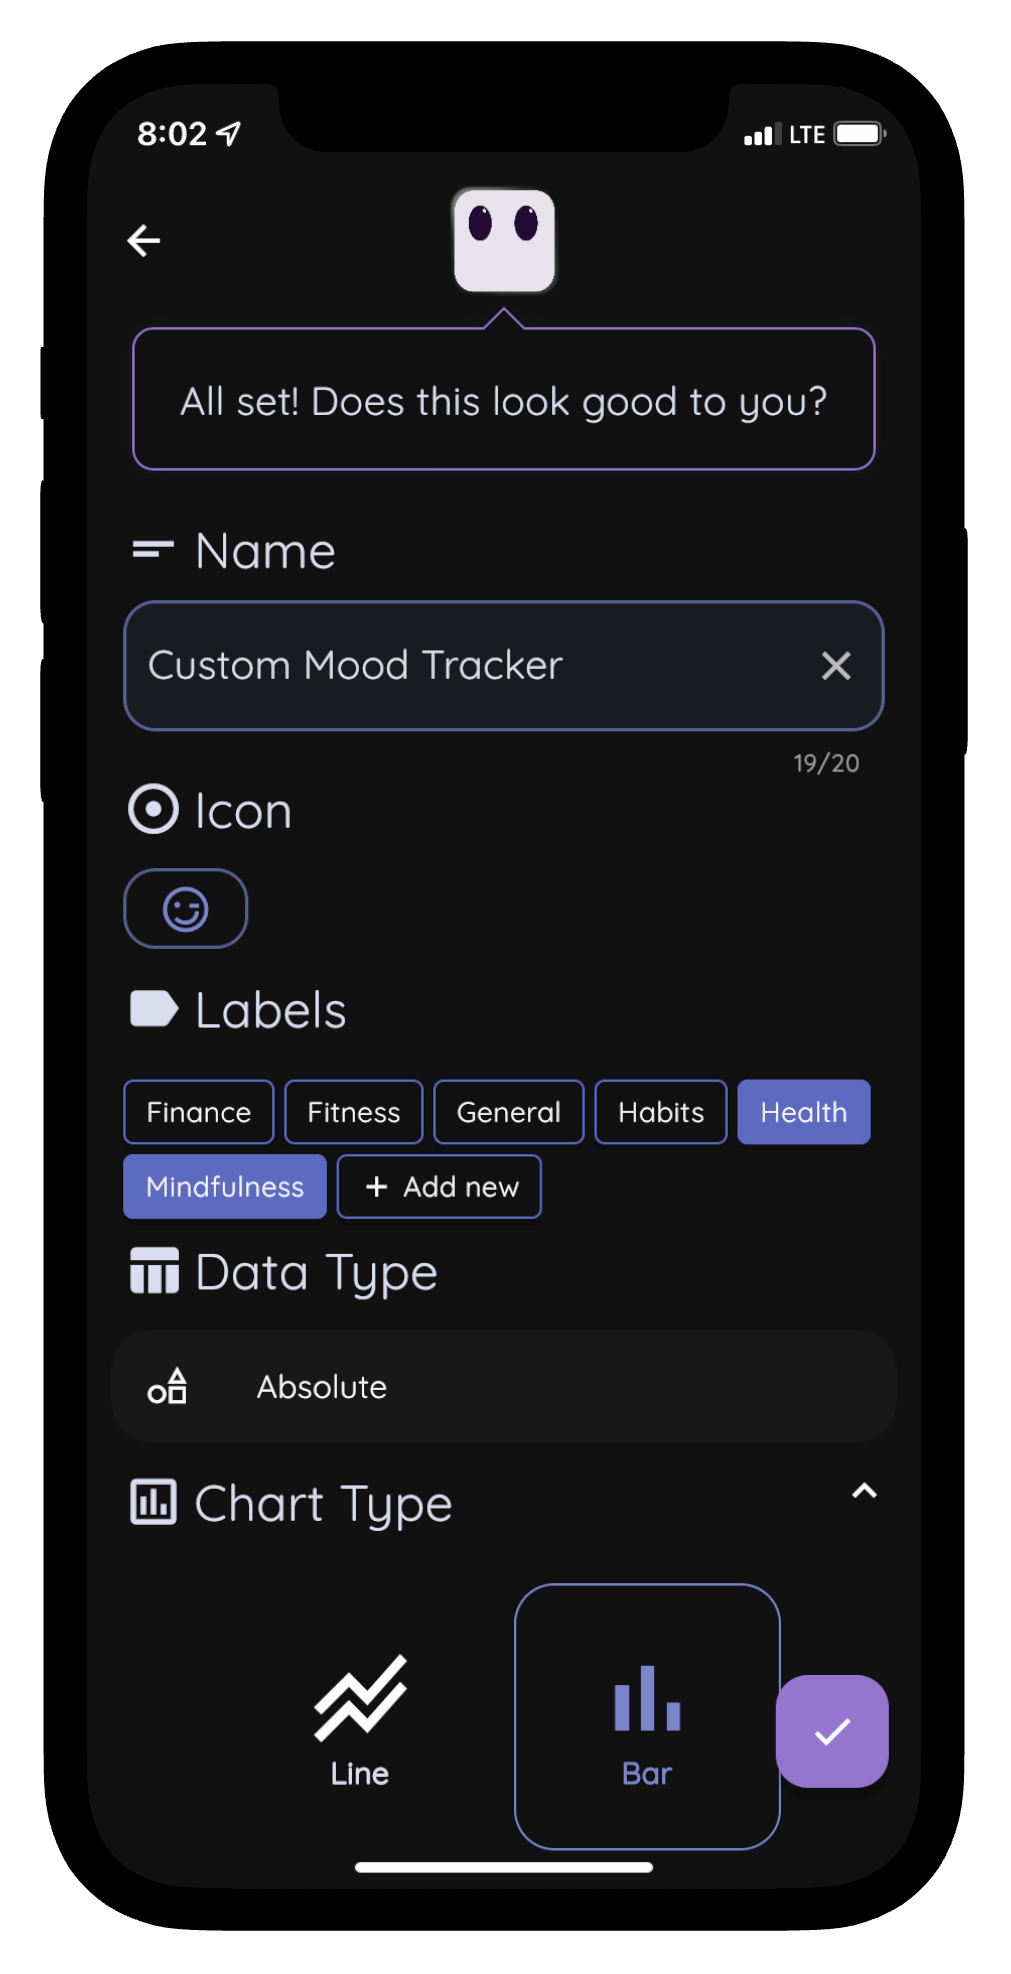 Mood tracker app with customizable mood tracker